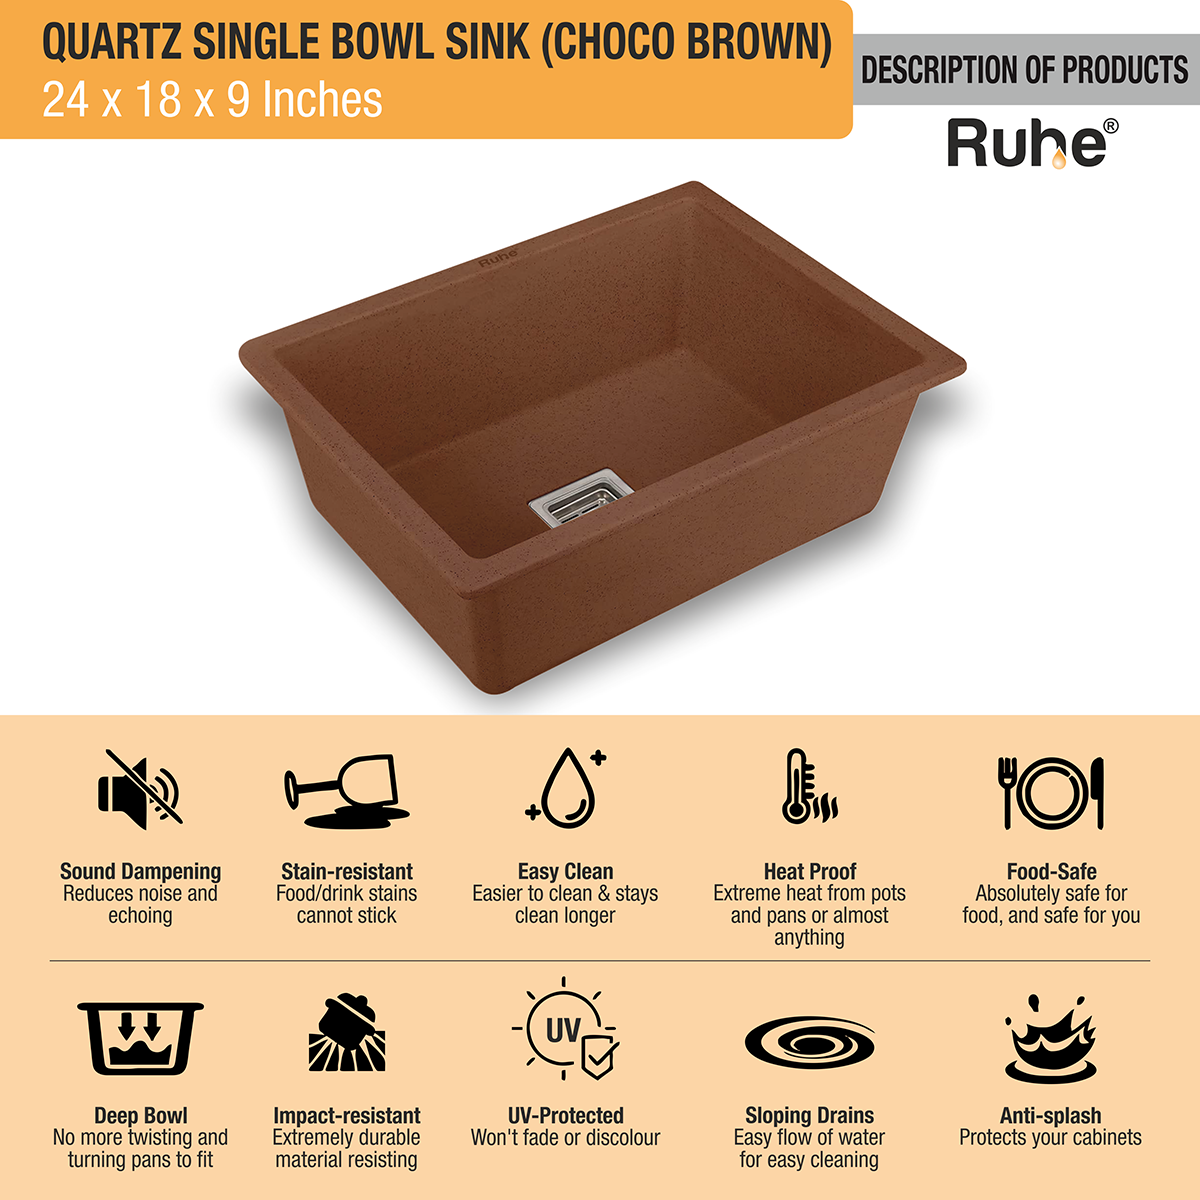 Quartz Single Bowl Choco Brown Kitchen Sink (24 x 18 x 9 inches) description of product